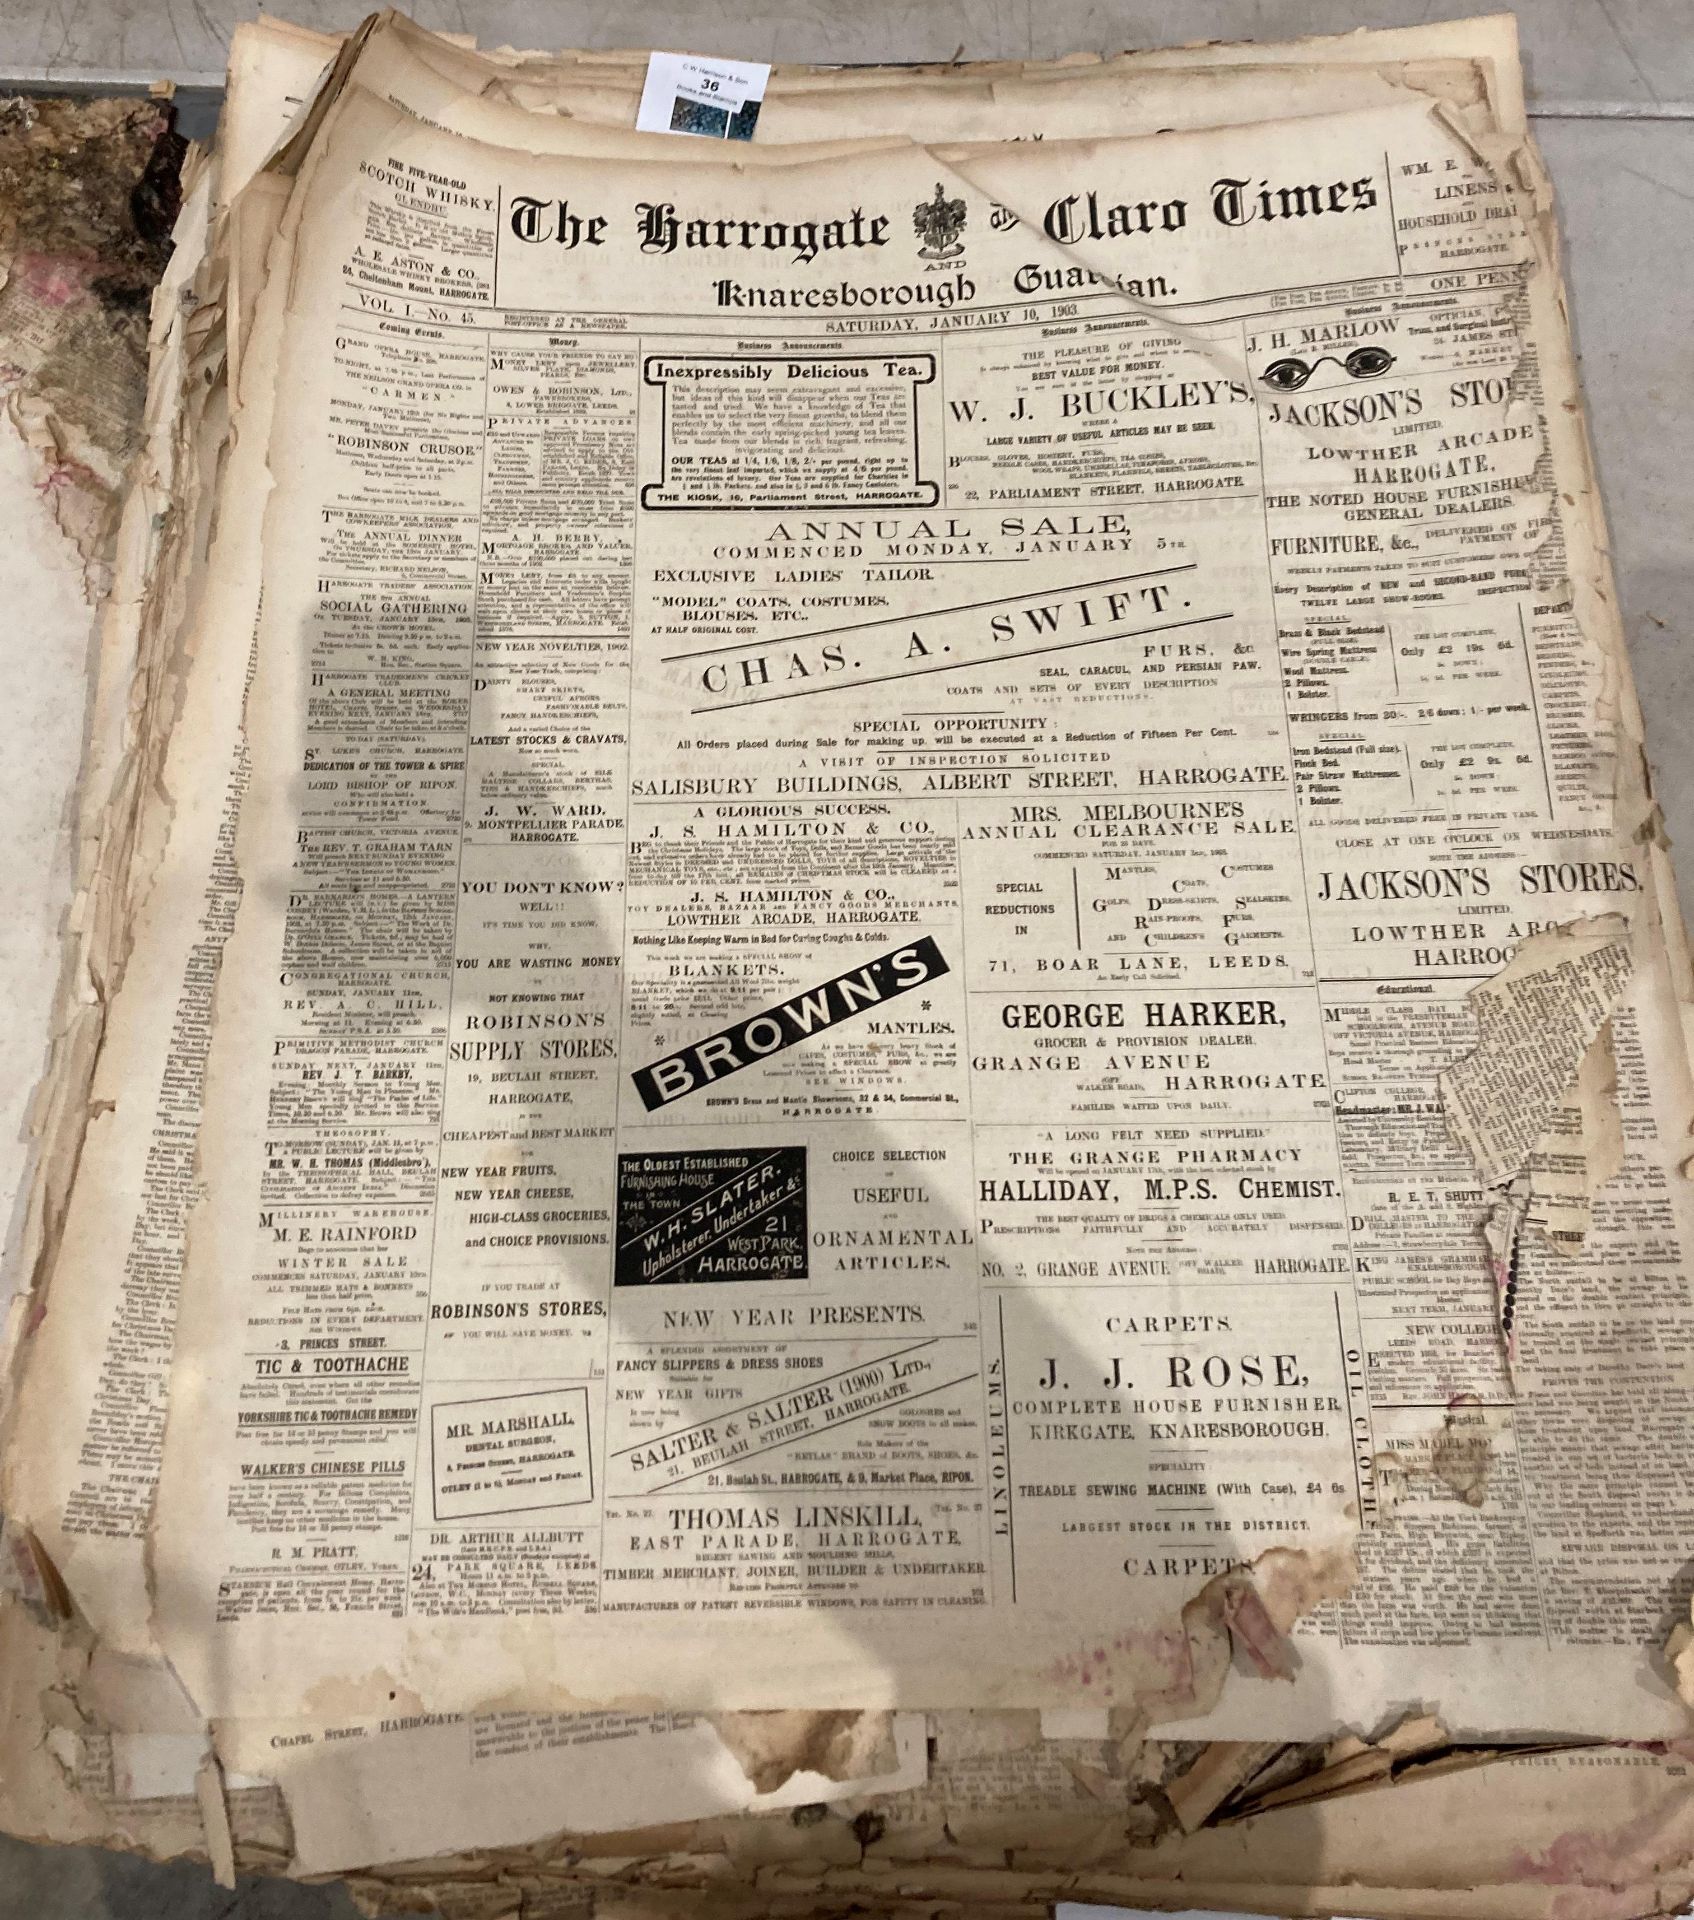 The Harrogate and Claro Times and Knaresborough Guardian - Jan 10th through Dec 24th 1903 - starts